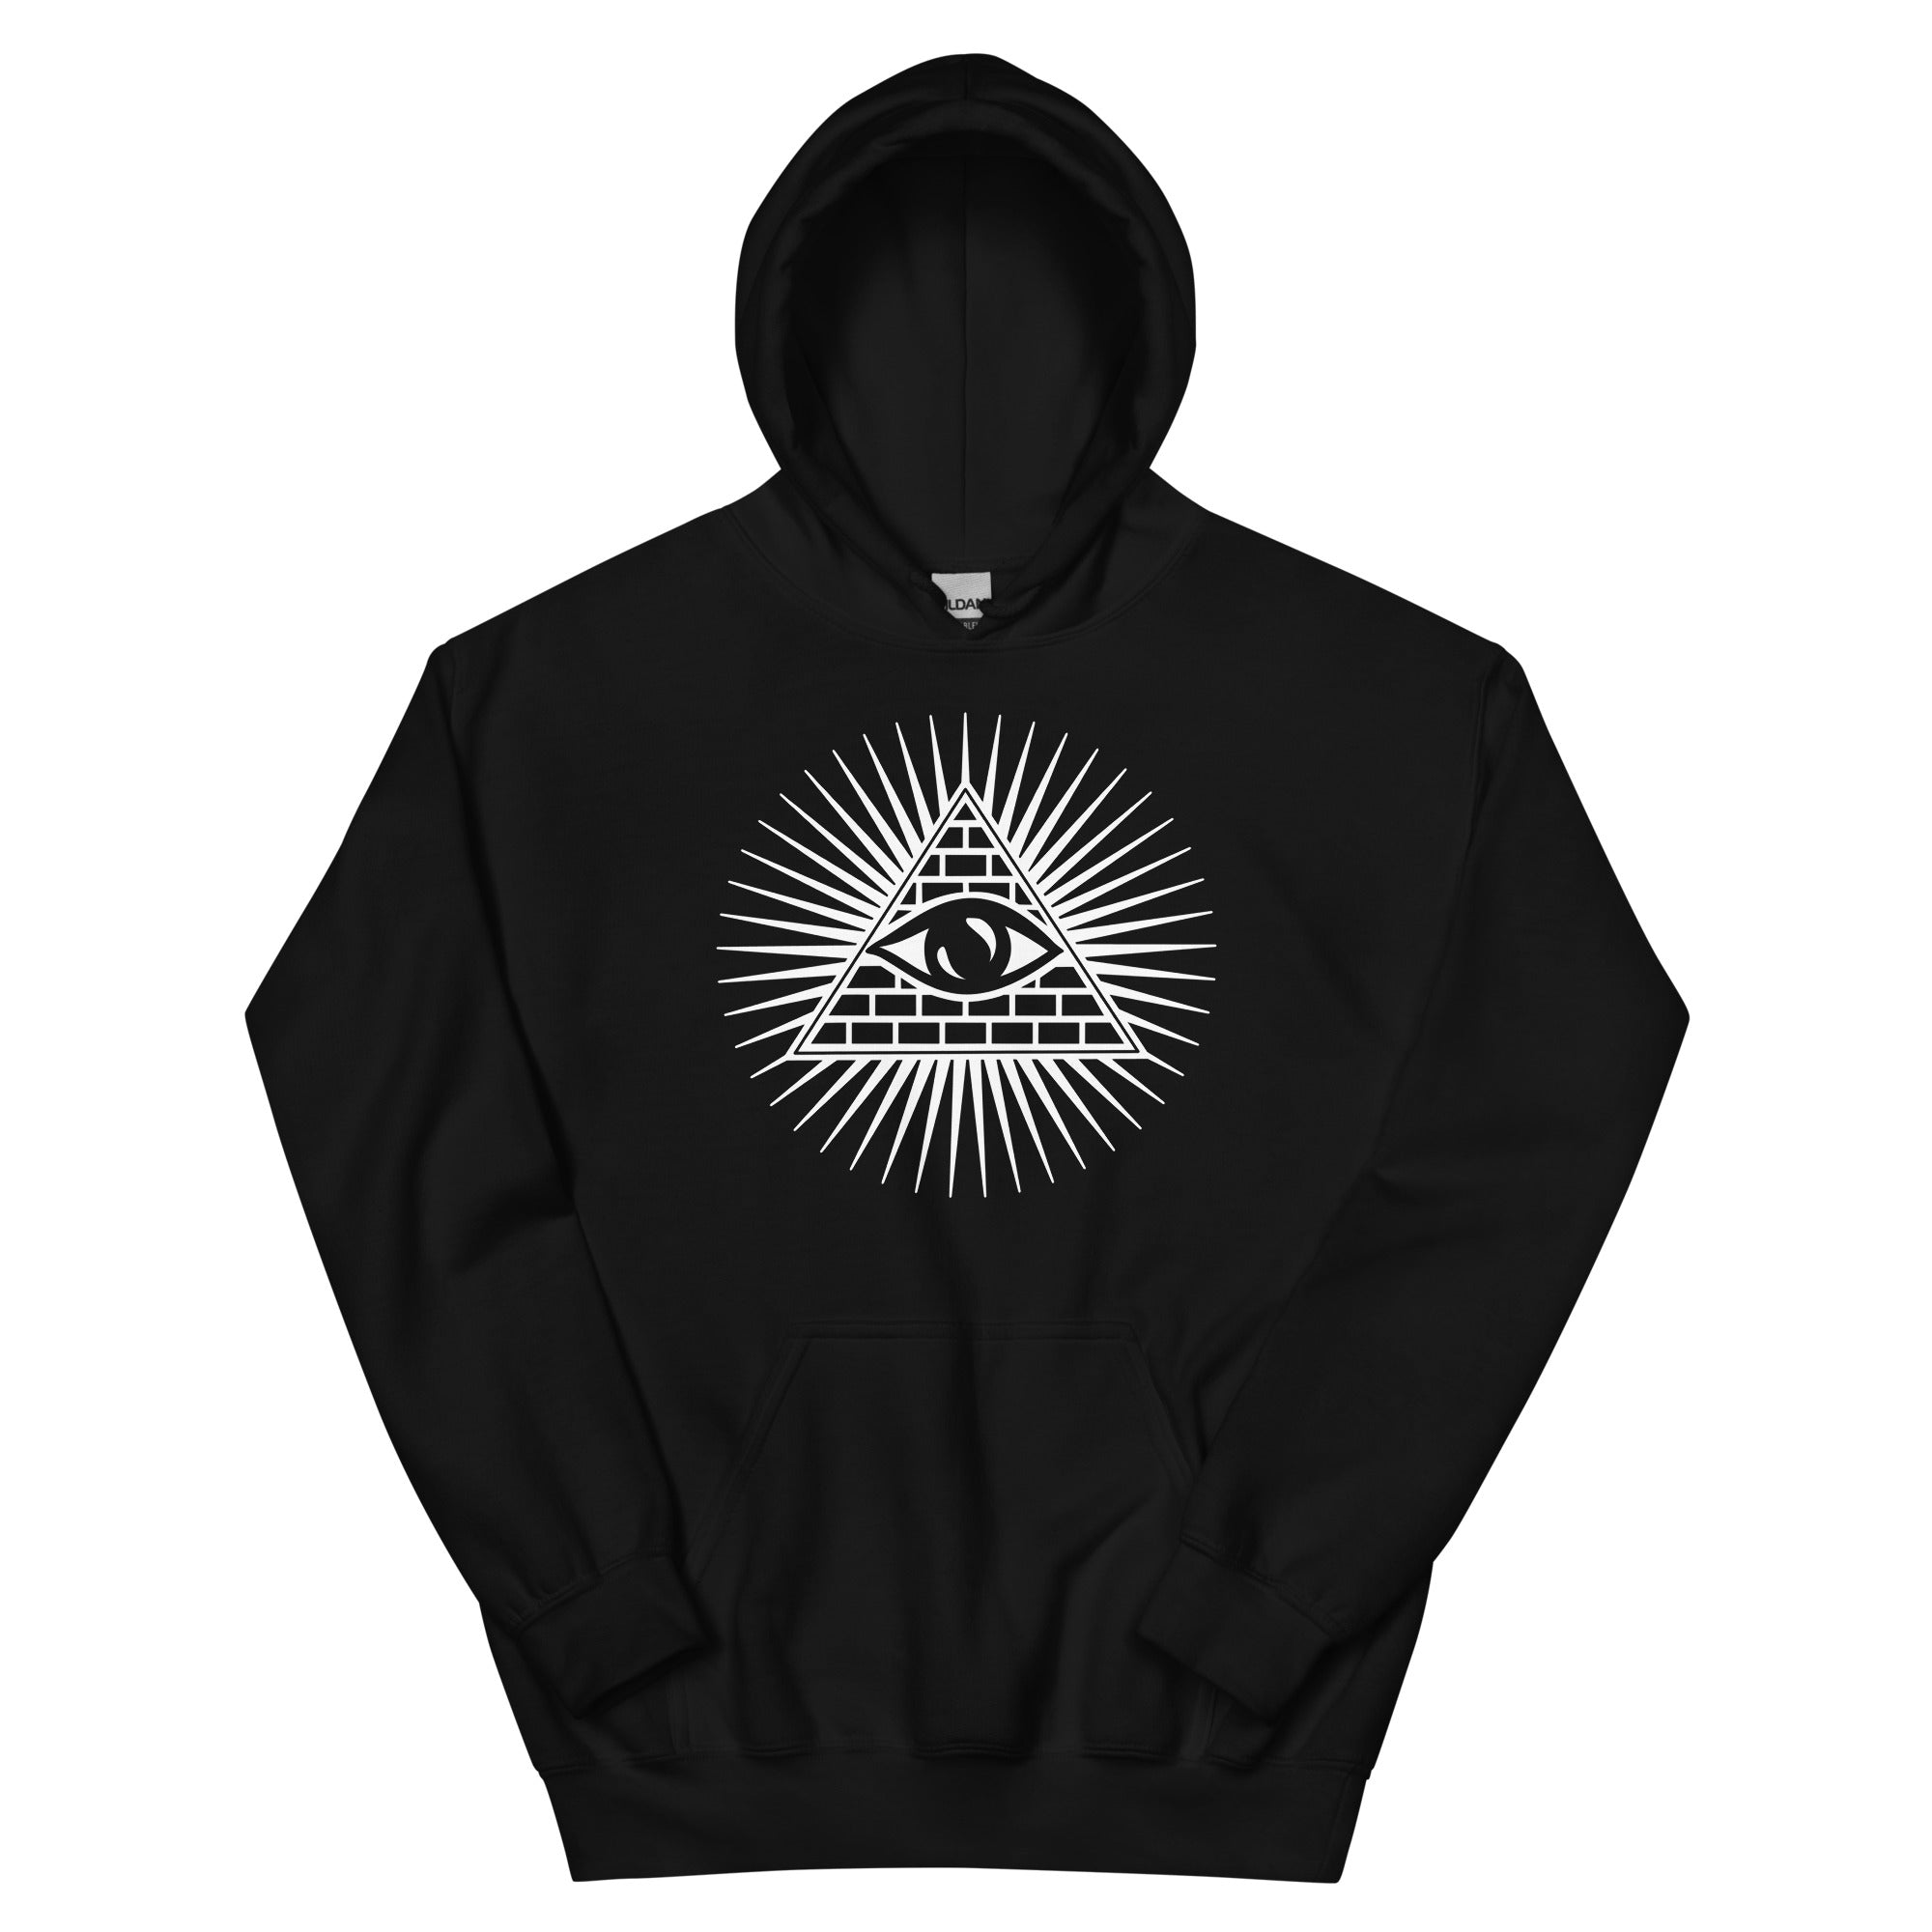 Illuminati All Seeing Psychic Eye Unisex Hoodie Sweatshirt - Edge of Life Designs